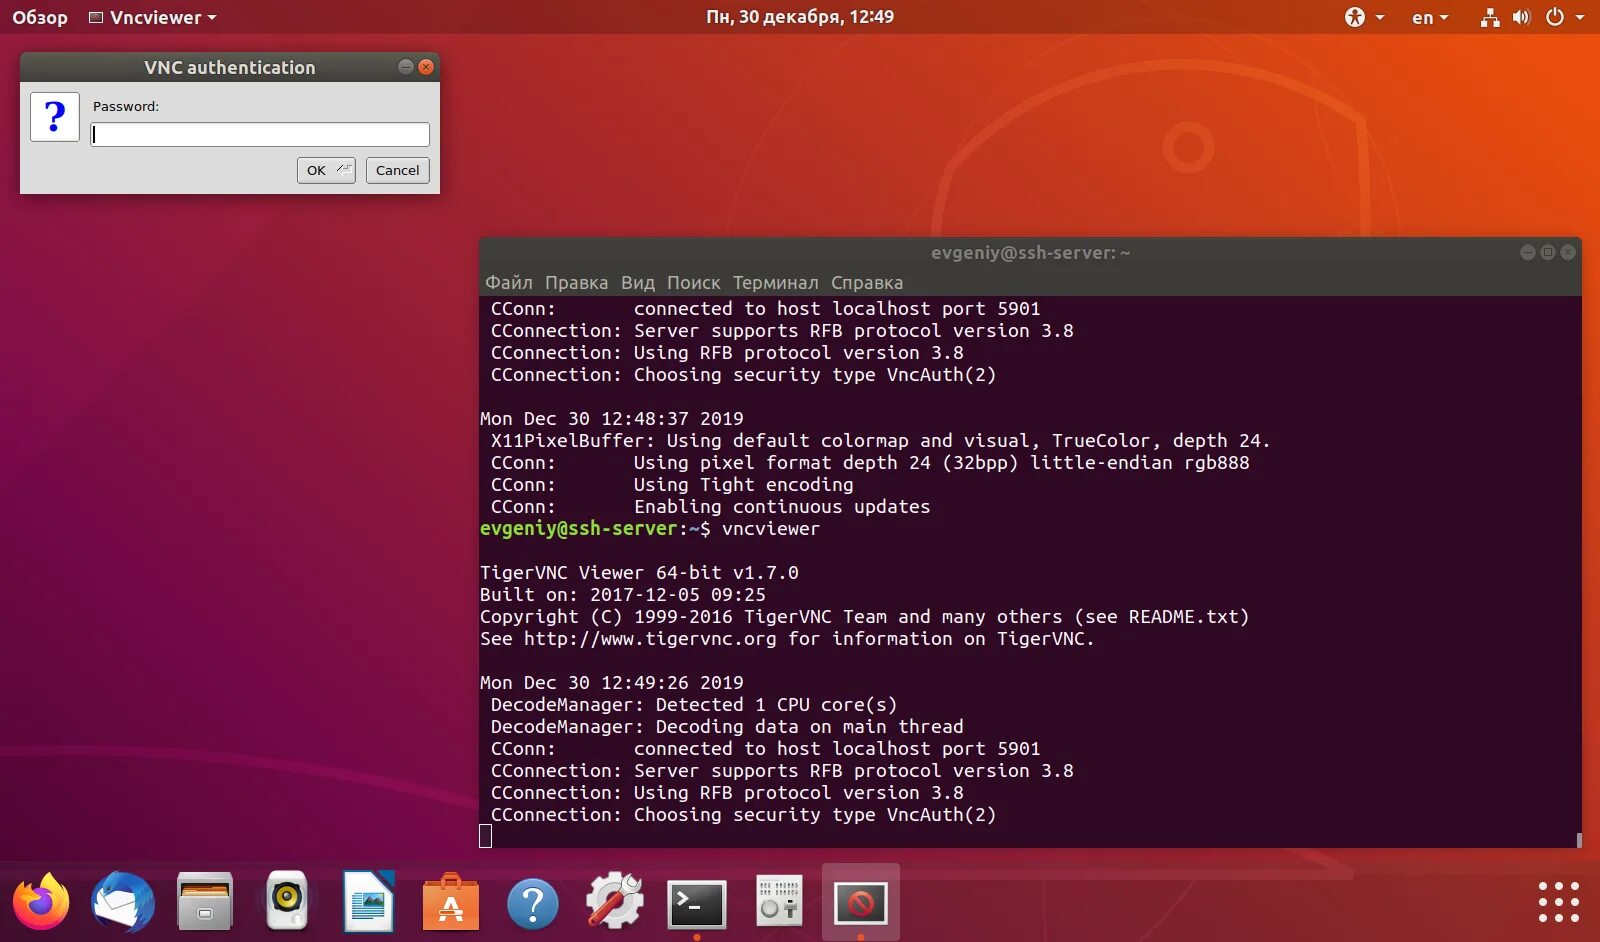 Linux vnc server. ОС Ubuntu 18. Операционная система Ubuntu Server. Убунту сервер 18.04. Сервер на базе Ubuntu.